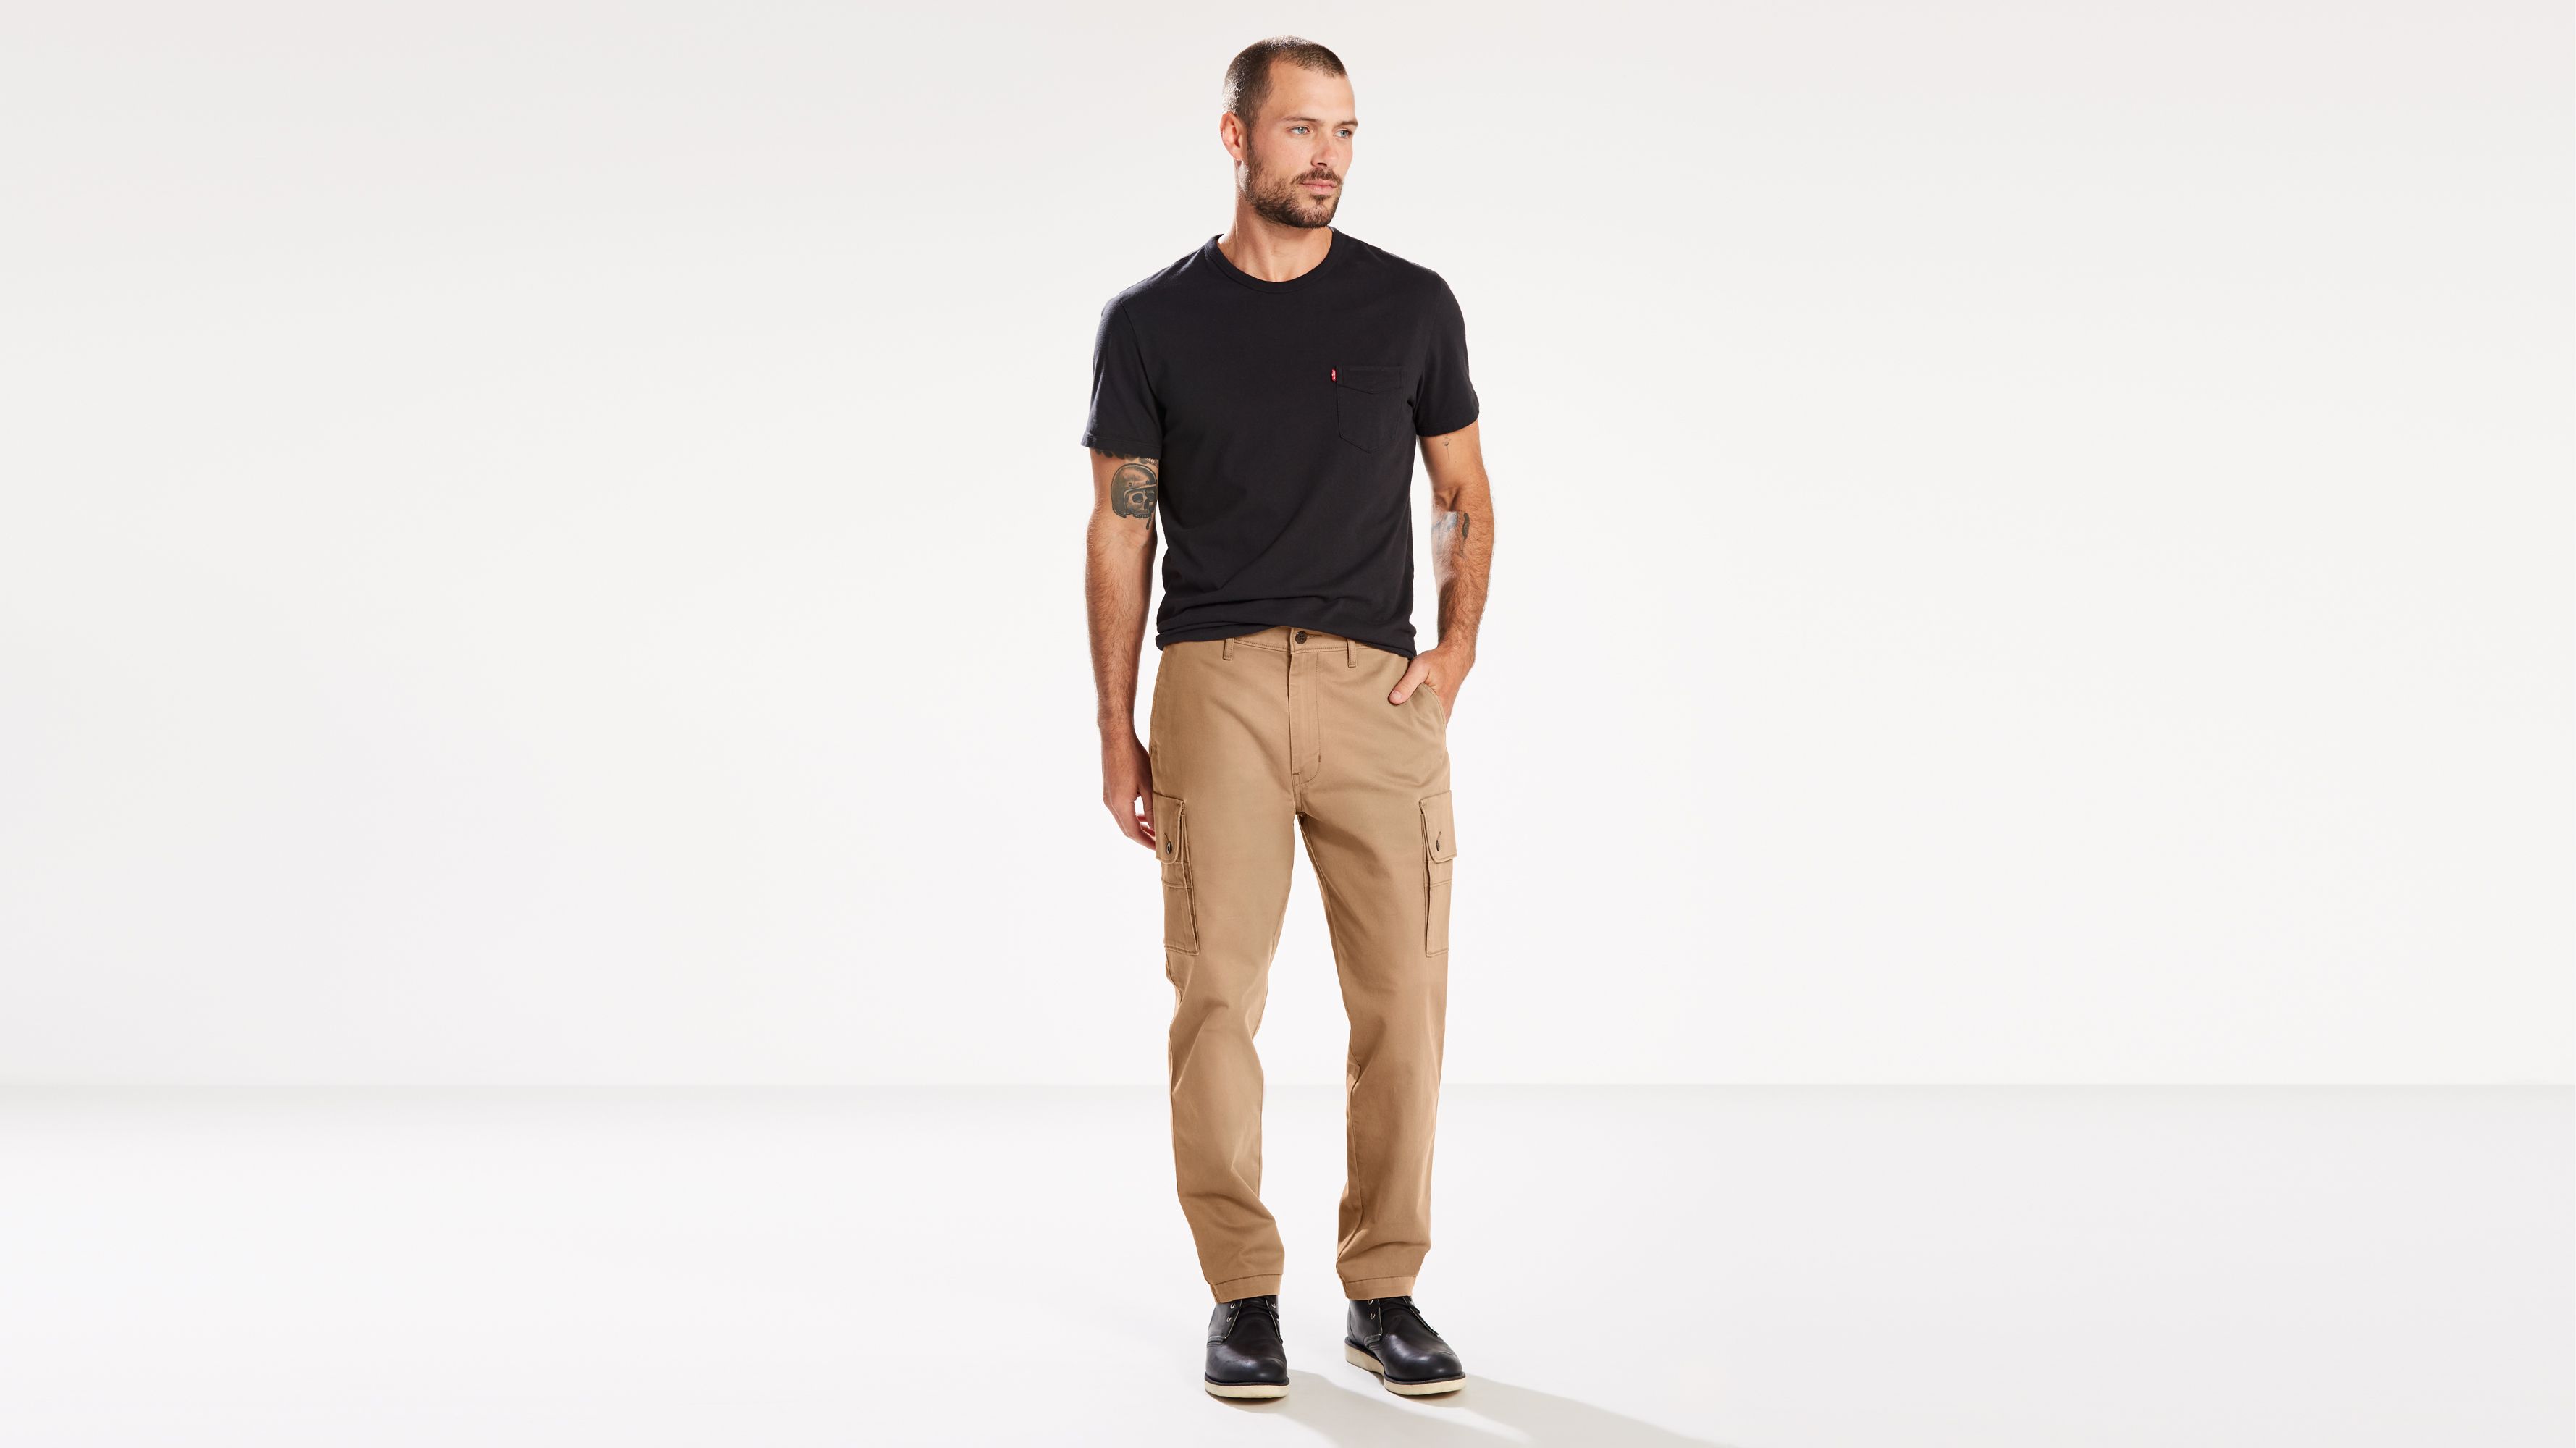 NWOT Levi's cargo shorts | Cargo shorts, Cargo shirts, Levi